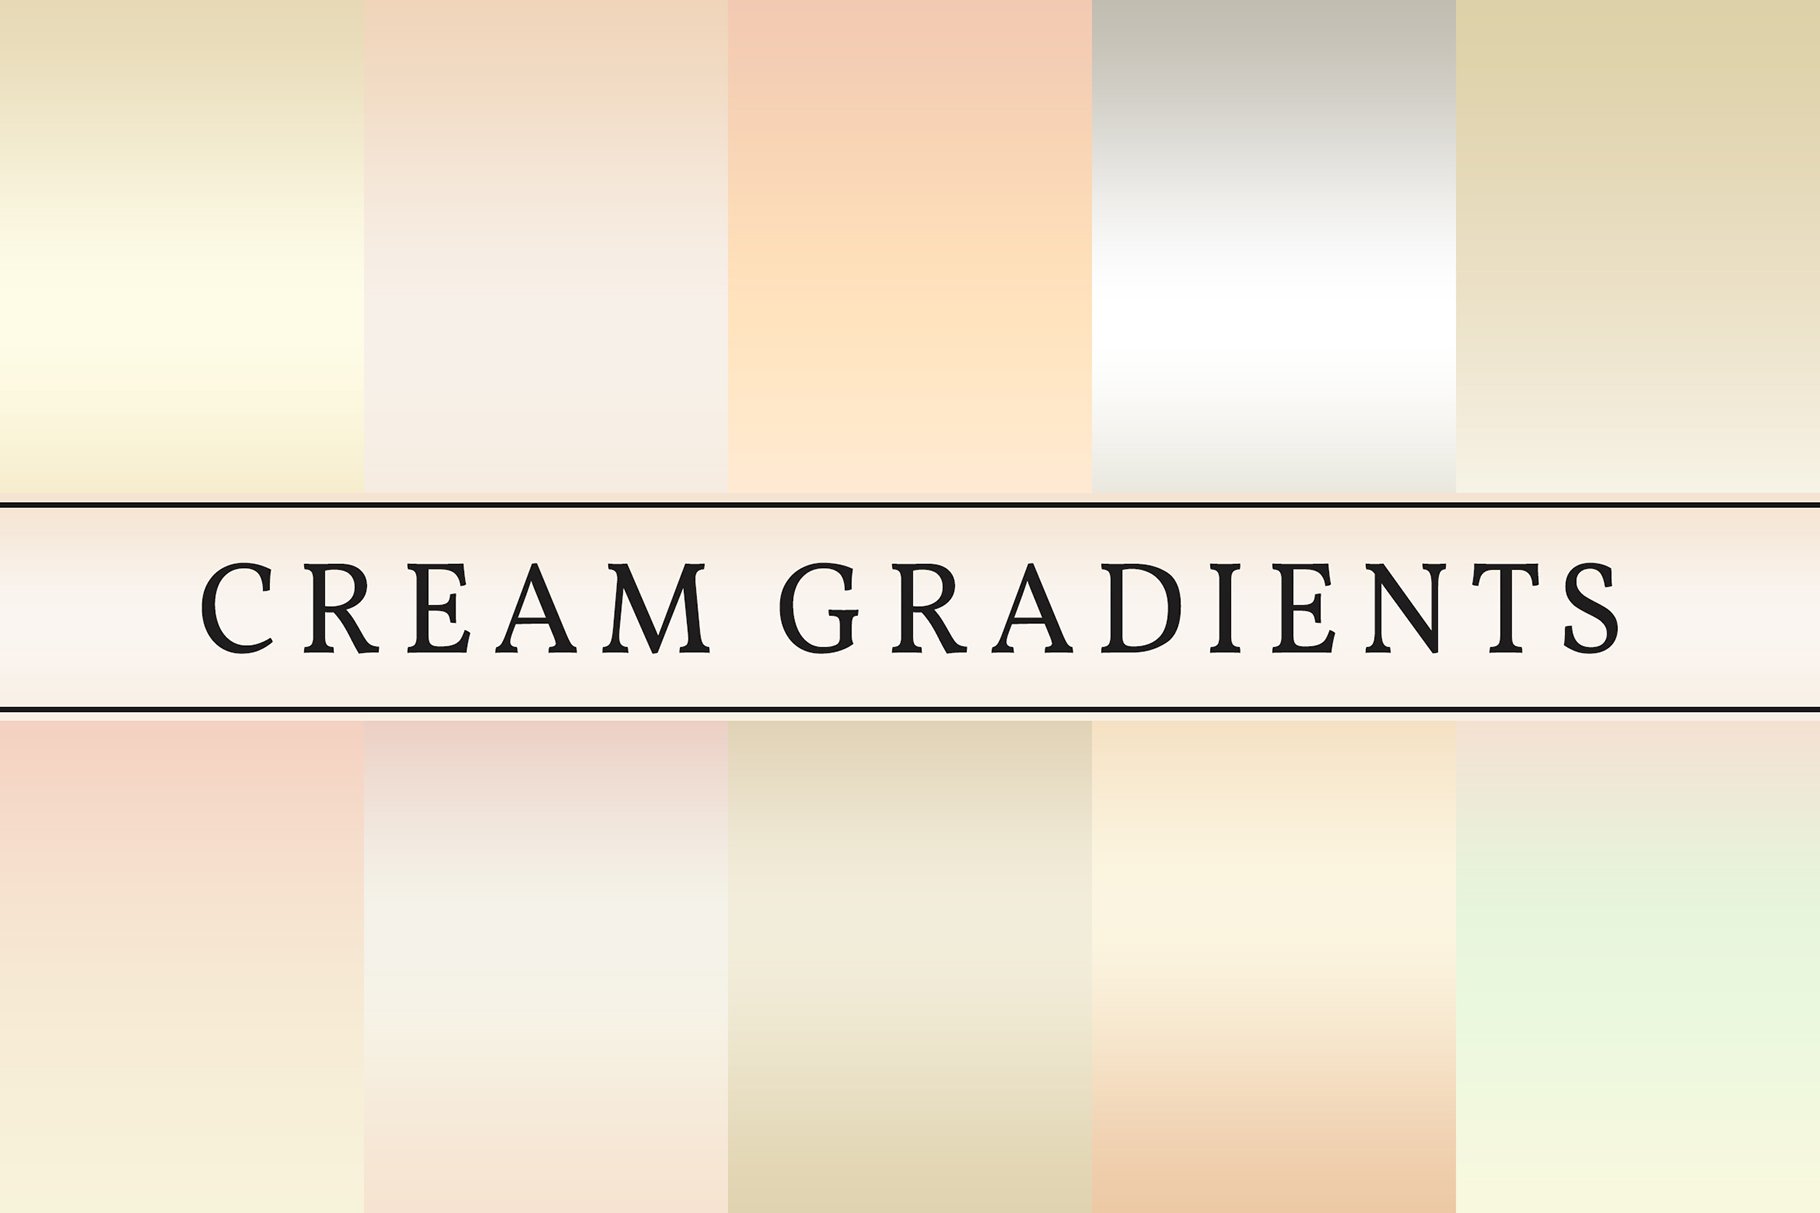 Cream Gradientscover image.